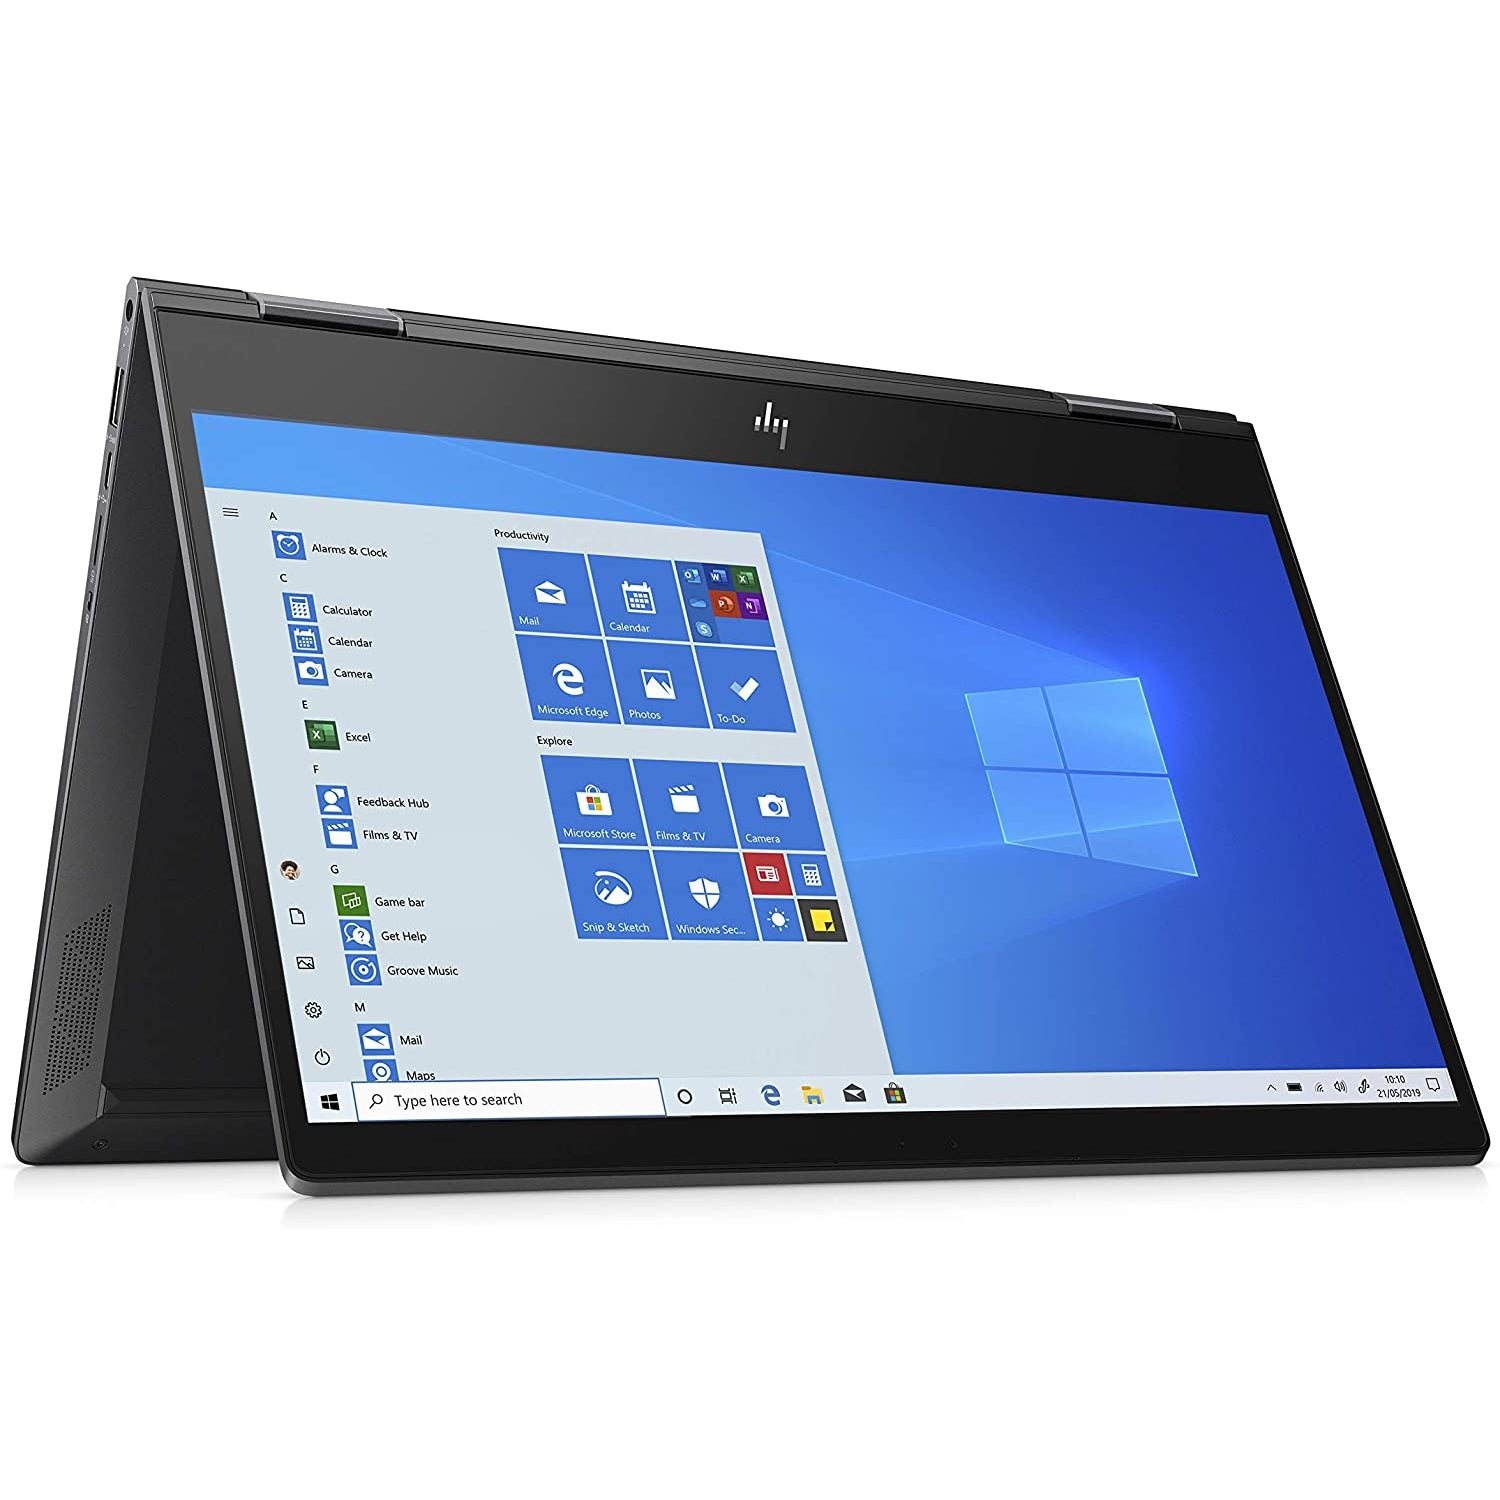 HP ENVY x360 13-ar0001na 13.3 Inch FHD Touch-Screen Convertible Laptop - (Black) (AMD Ryzen 5-3500U Quad Core